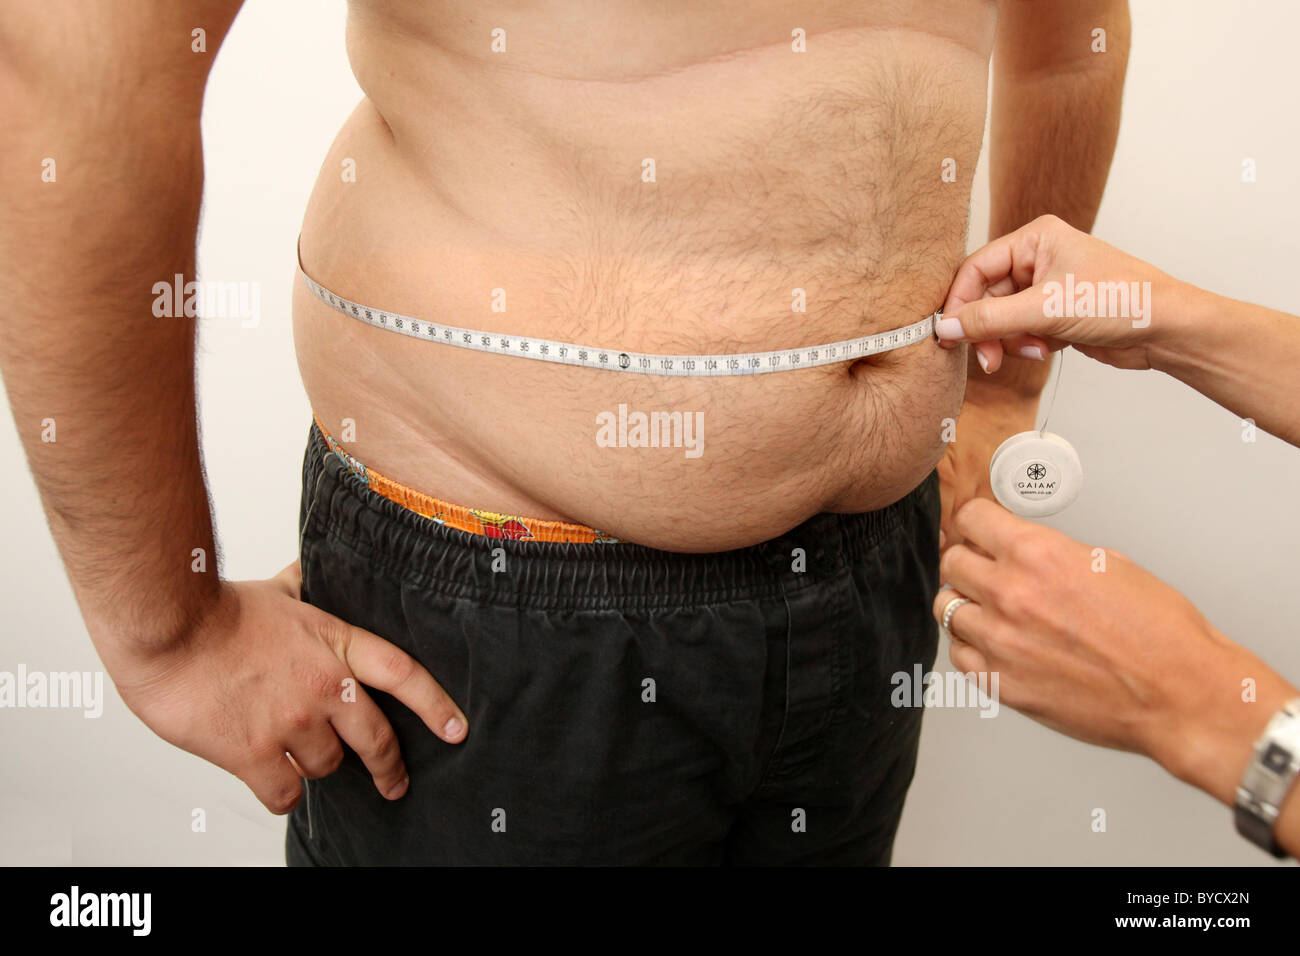 Woman measuring man's waist. Stock Photo